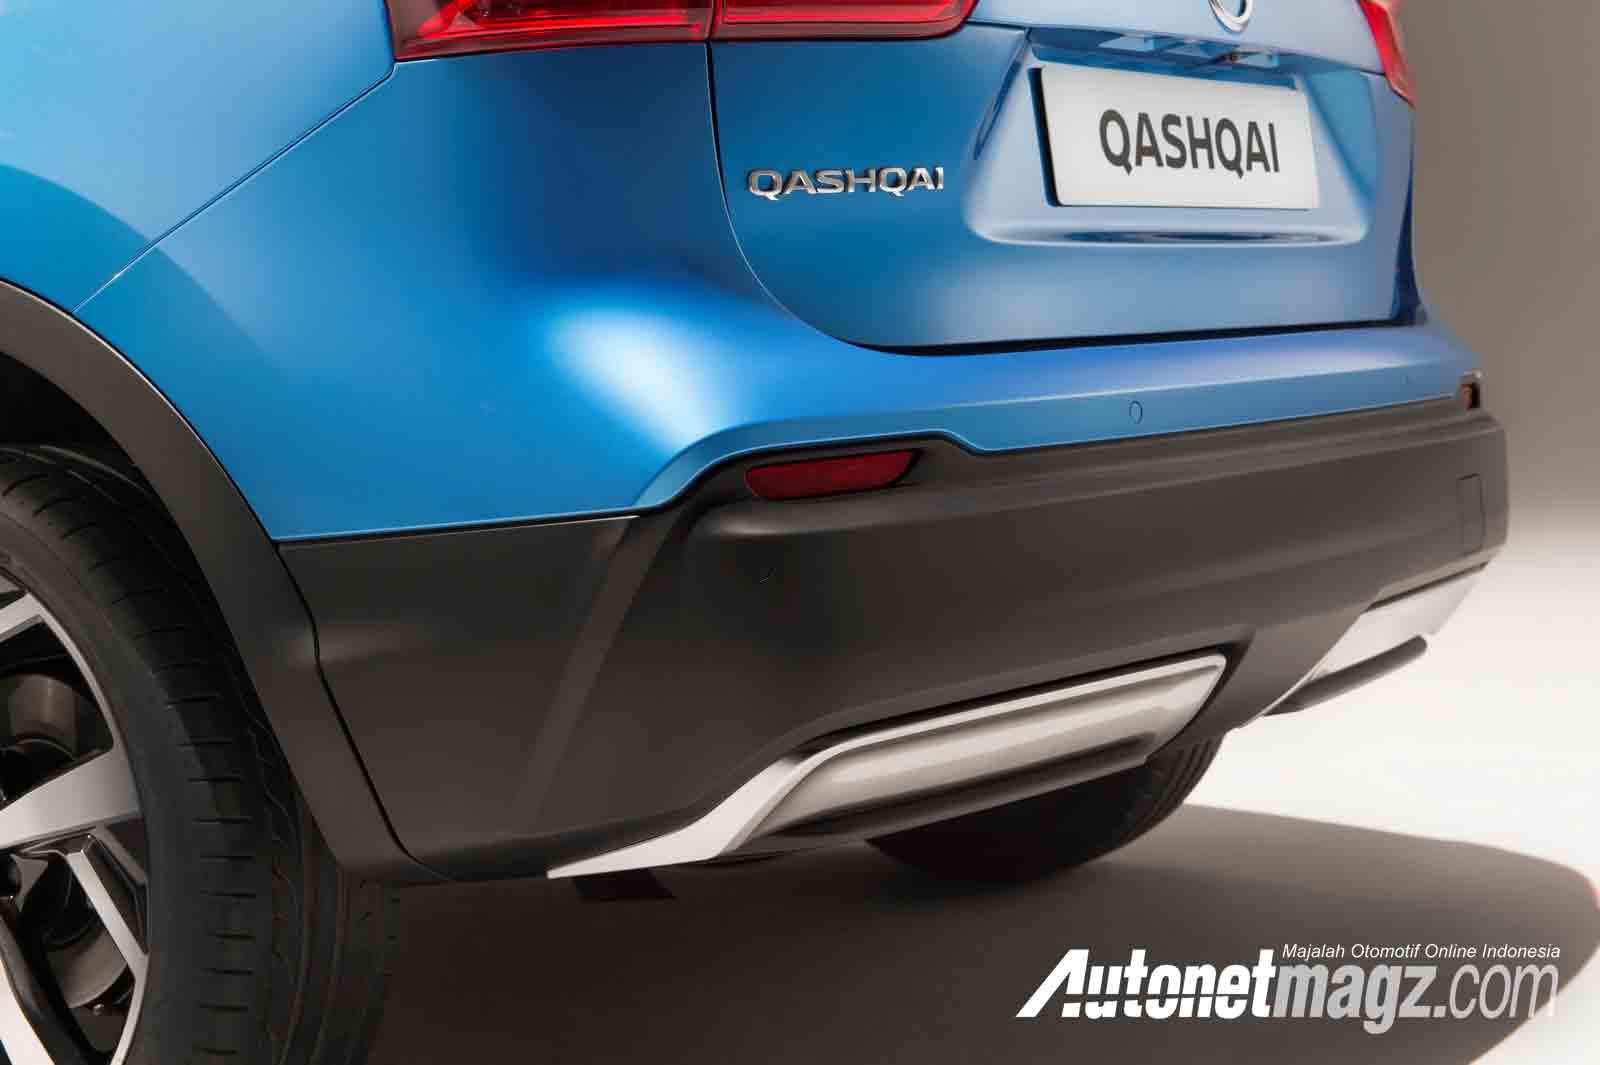 Mobil Baru, Nissan-Qashqai—14: Nissan Qashqai Facelift 2018 Kini Bawa Sistem Autonomous ProPILOT